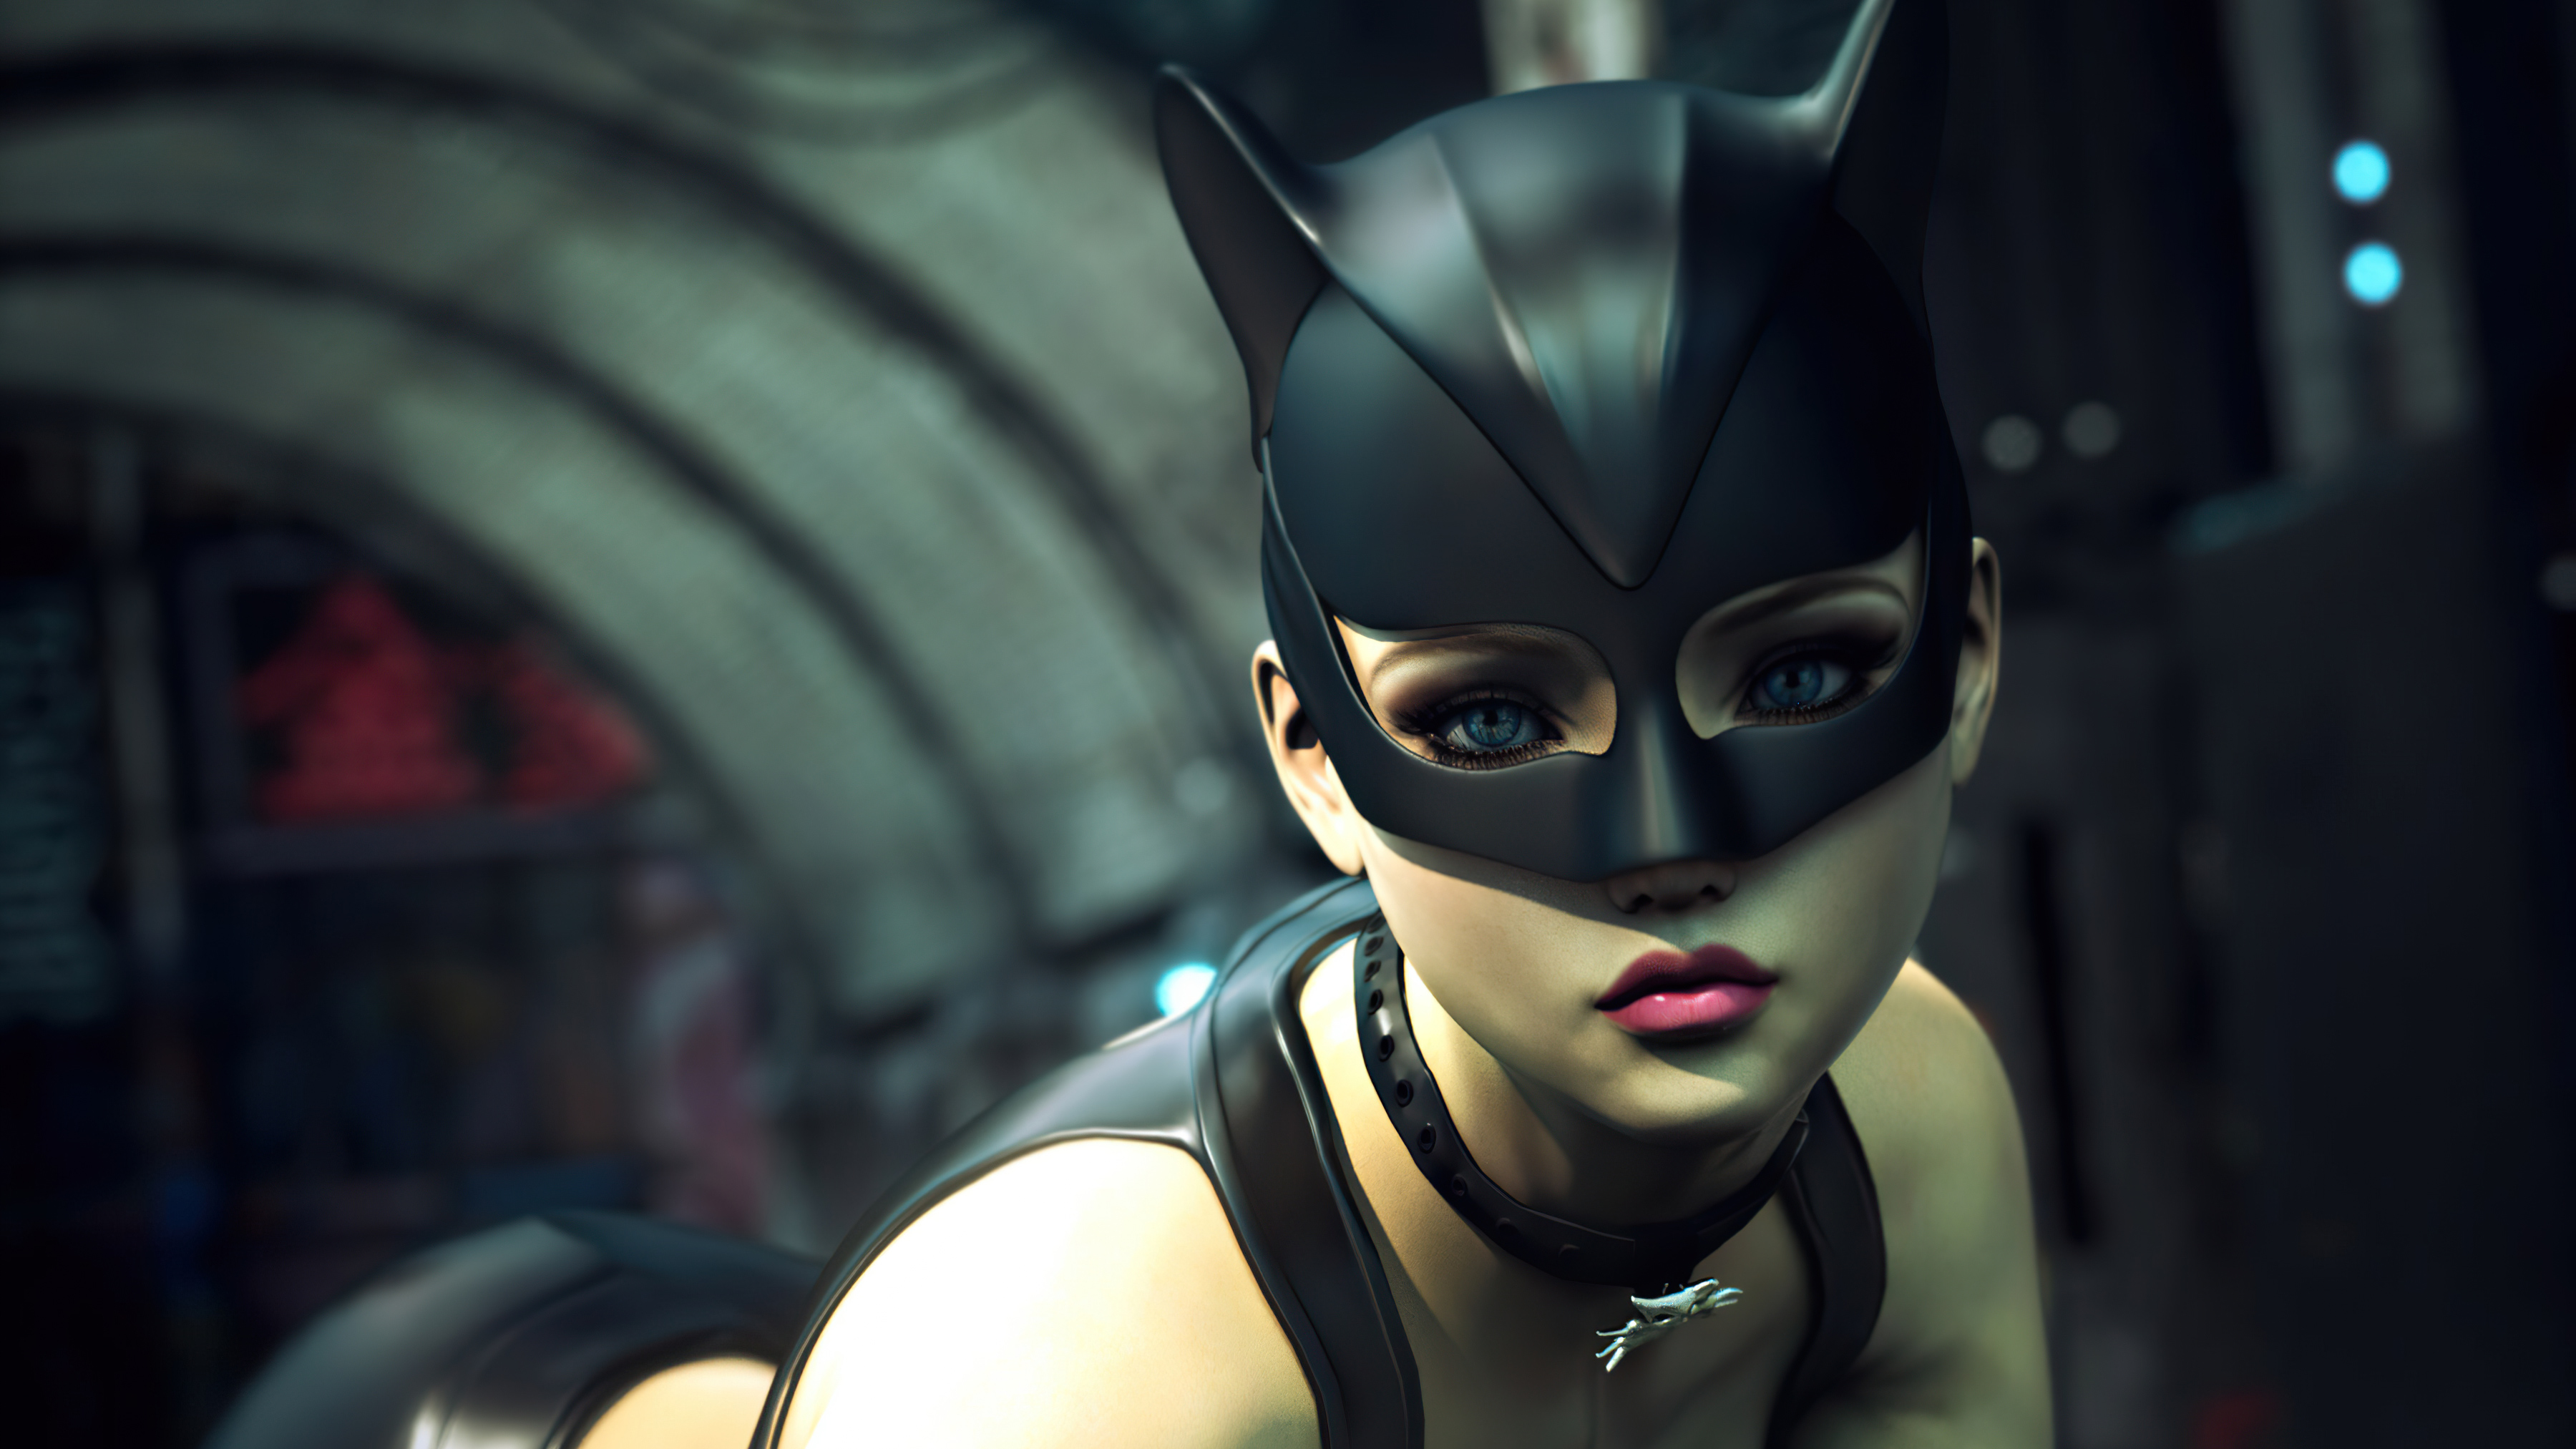 Wallpapers rendering catwoman superheroes on the desktop